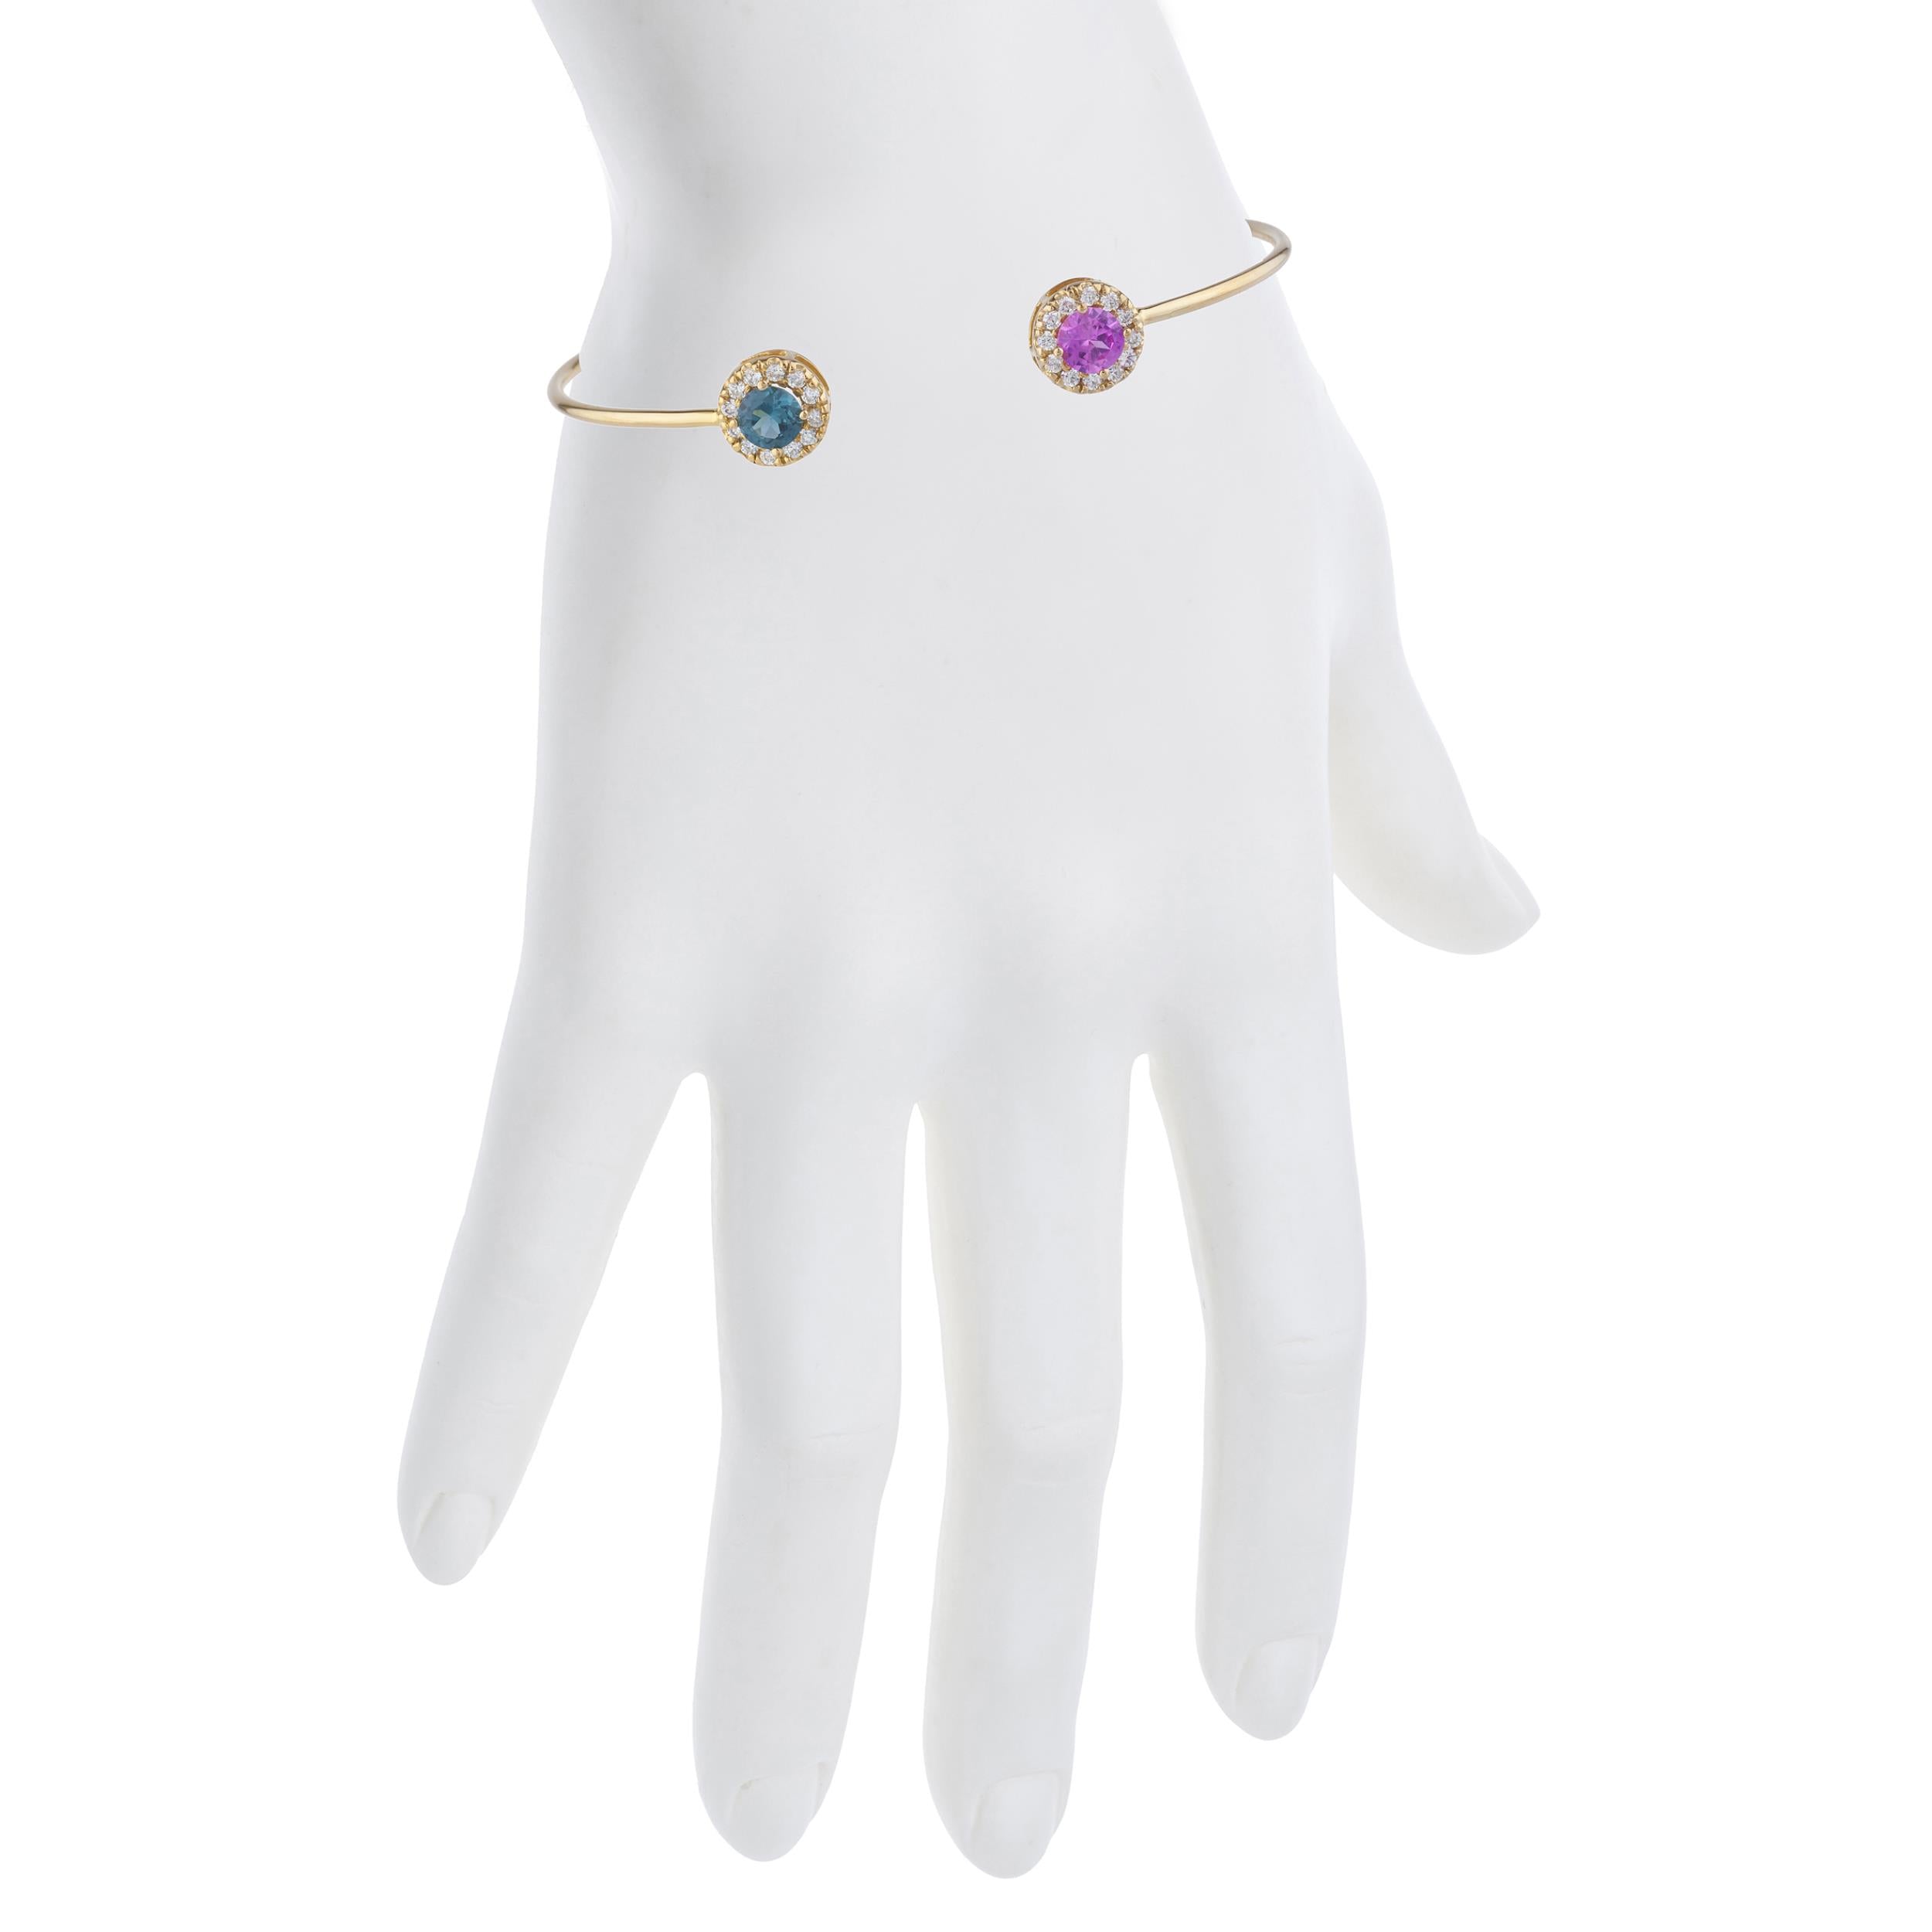 14Kt Gold Pink Sapphire & London Blue Topaz Halo Design Bangle Bracelet